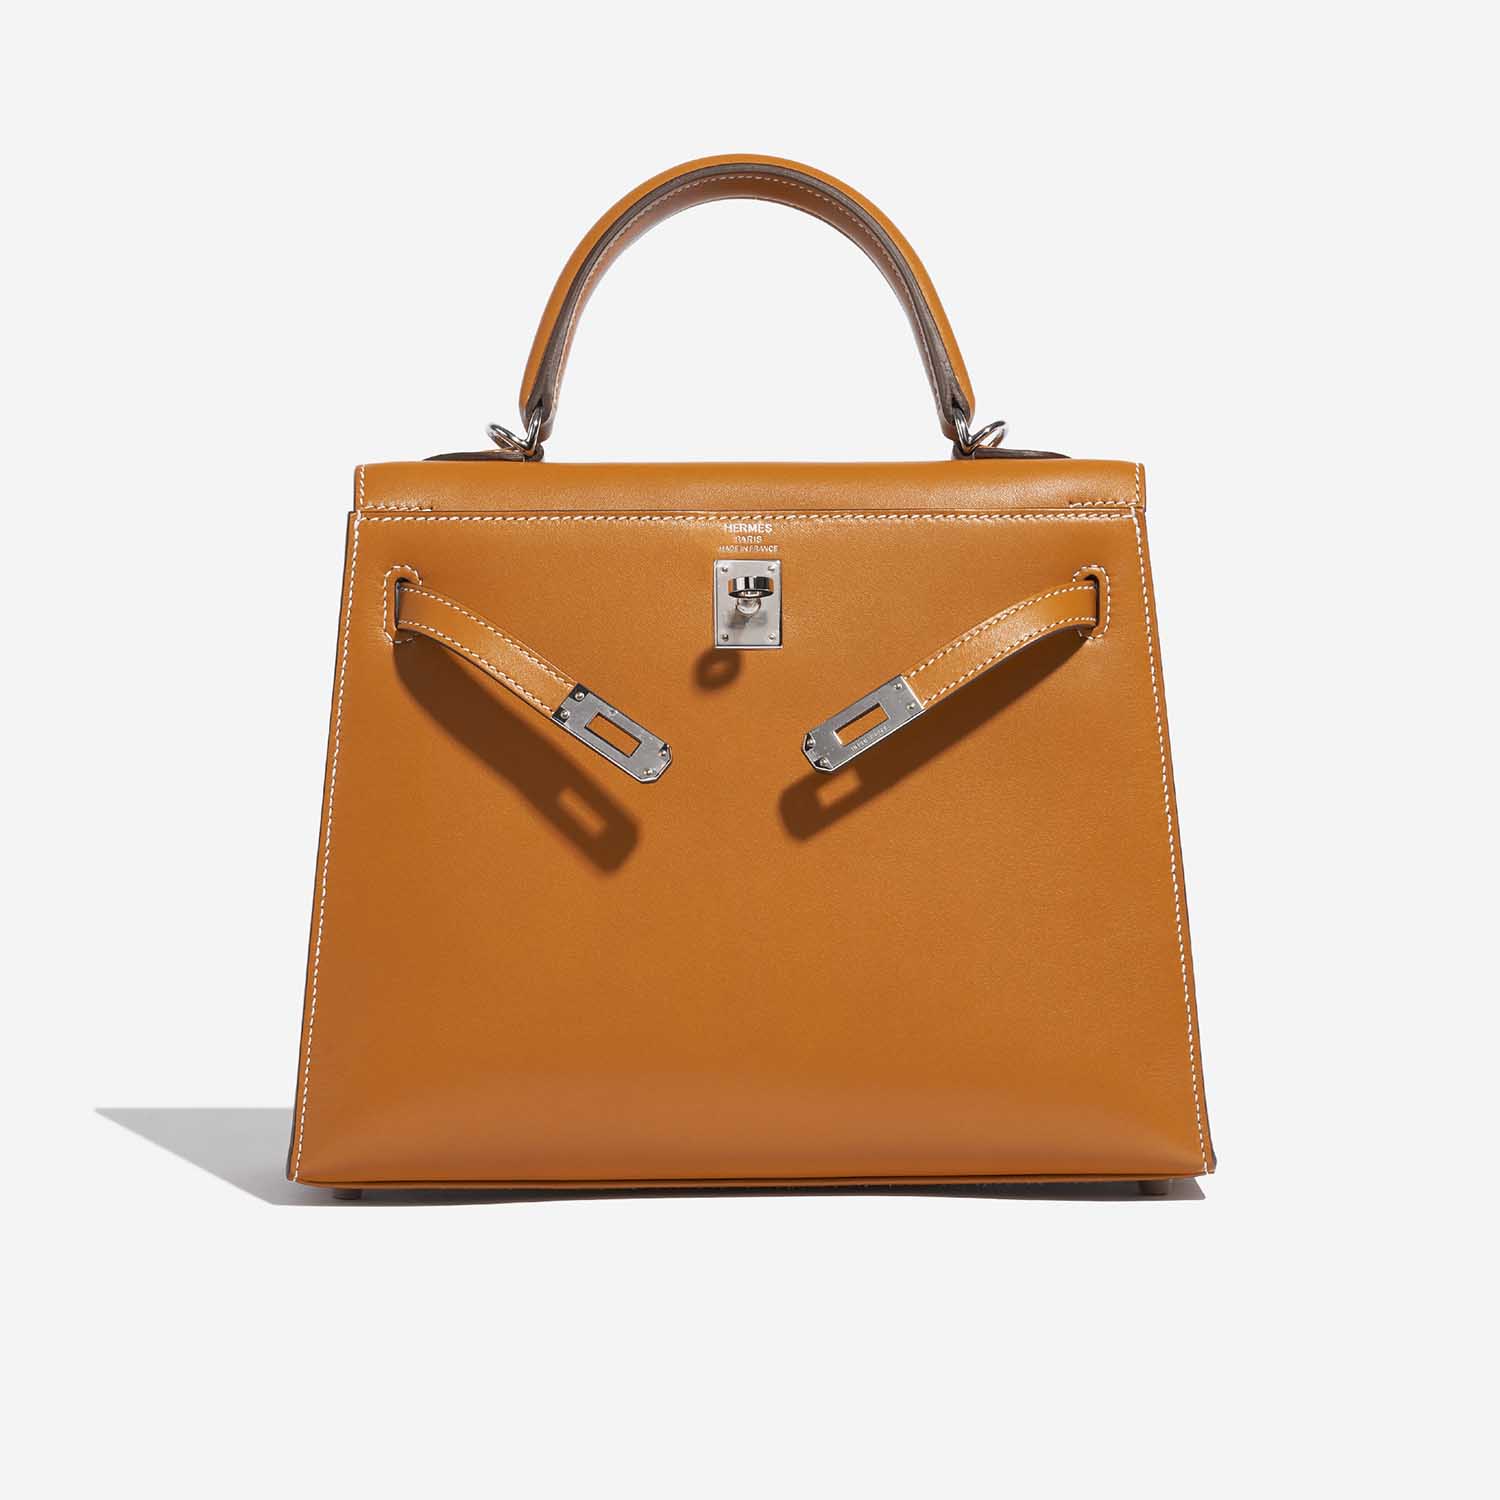 Pre-owned Hermès bag Kelly 25 Sable Butler Natural Brown Front Open | Sell your designer bag on Saclab.com